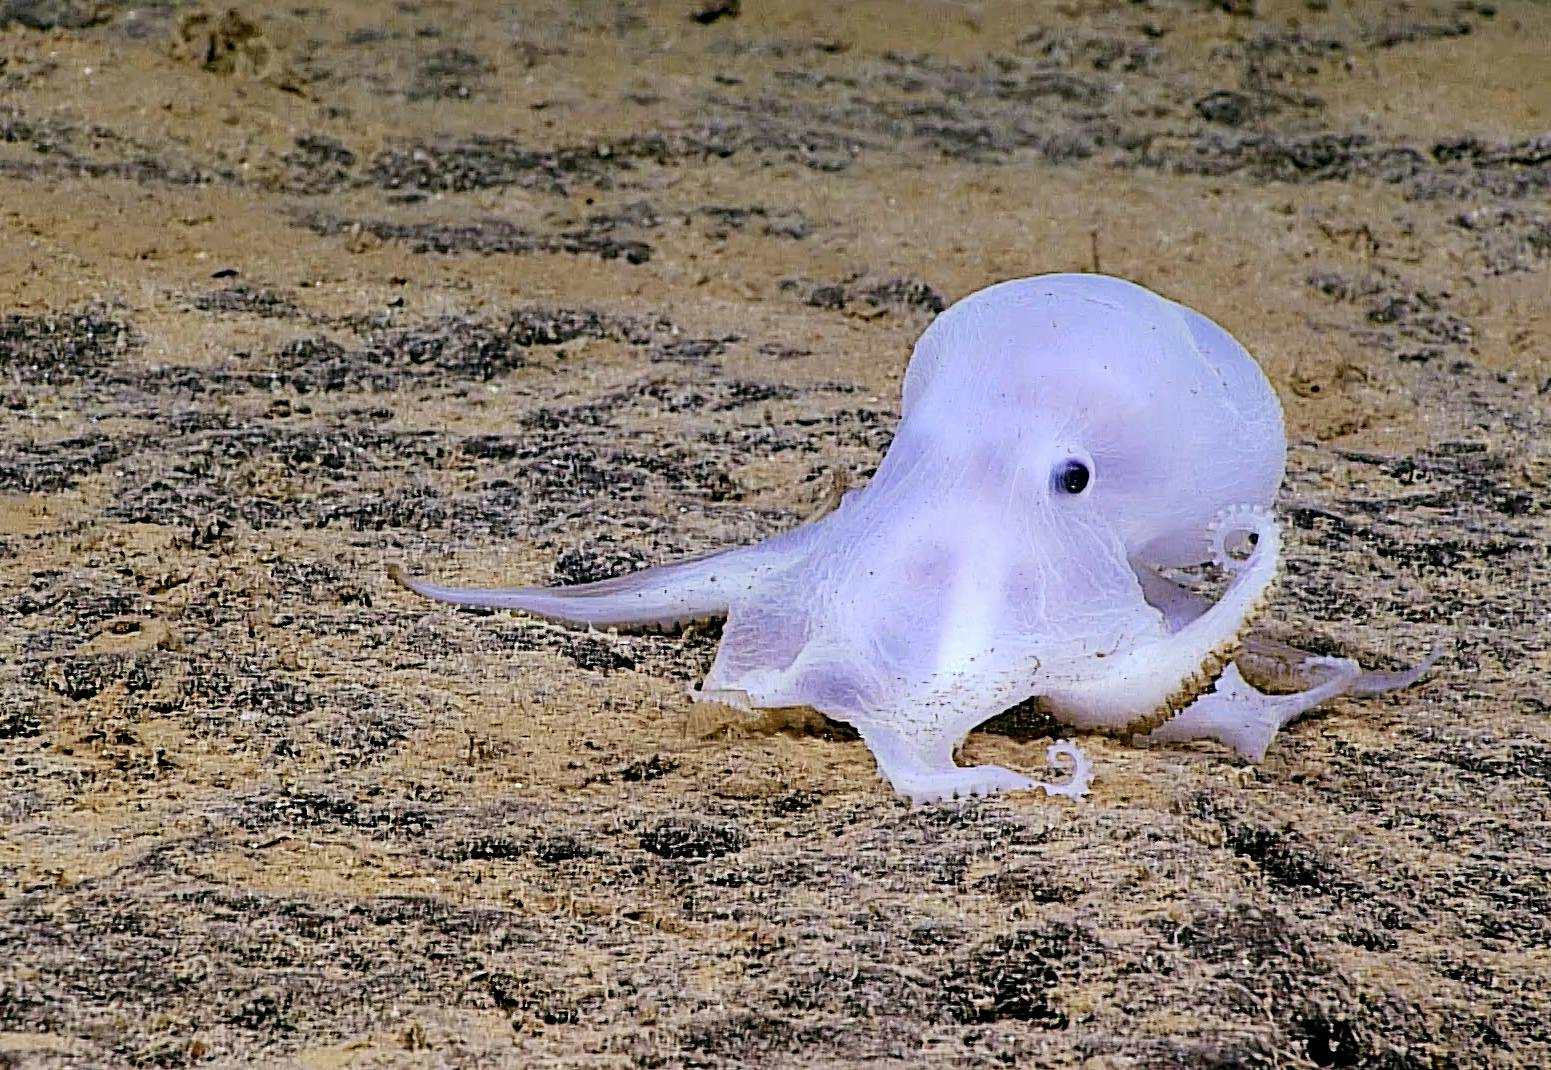 deep sea animals